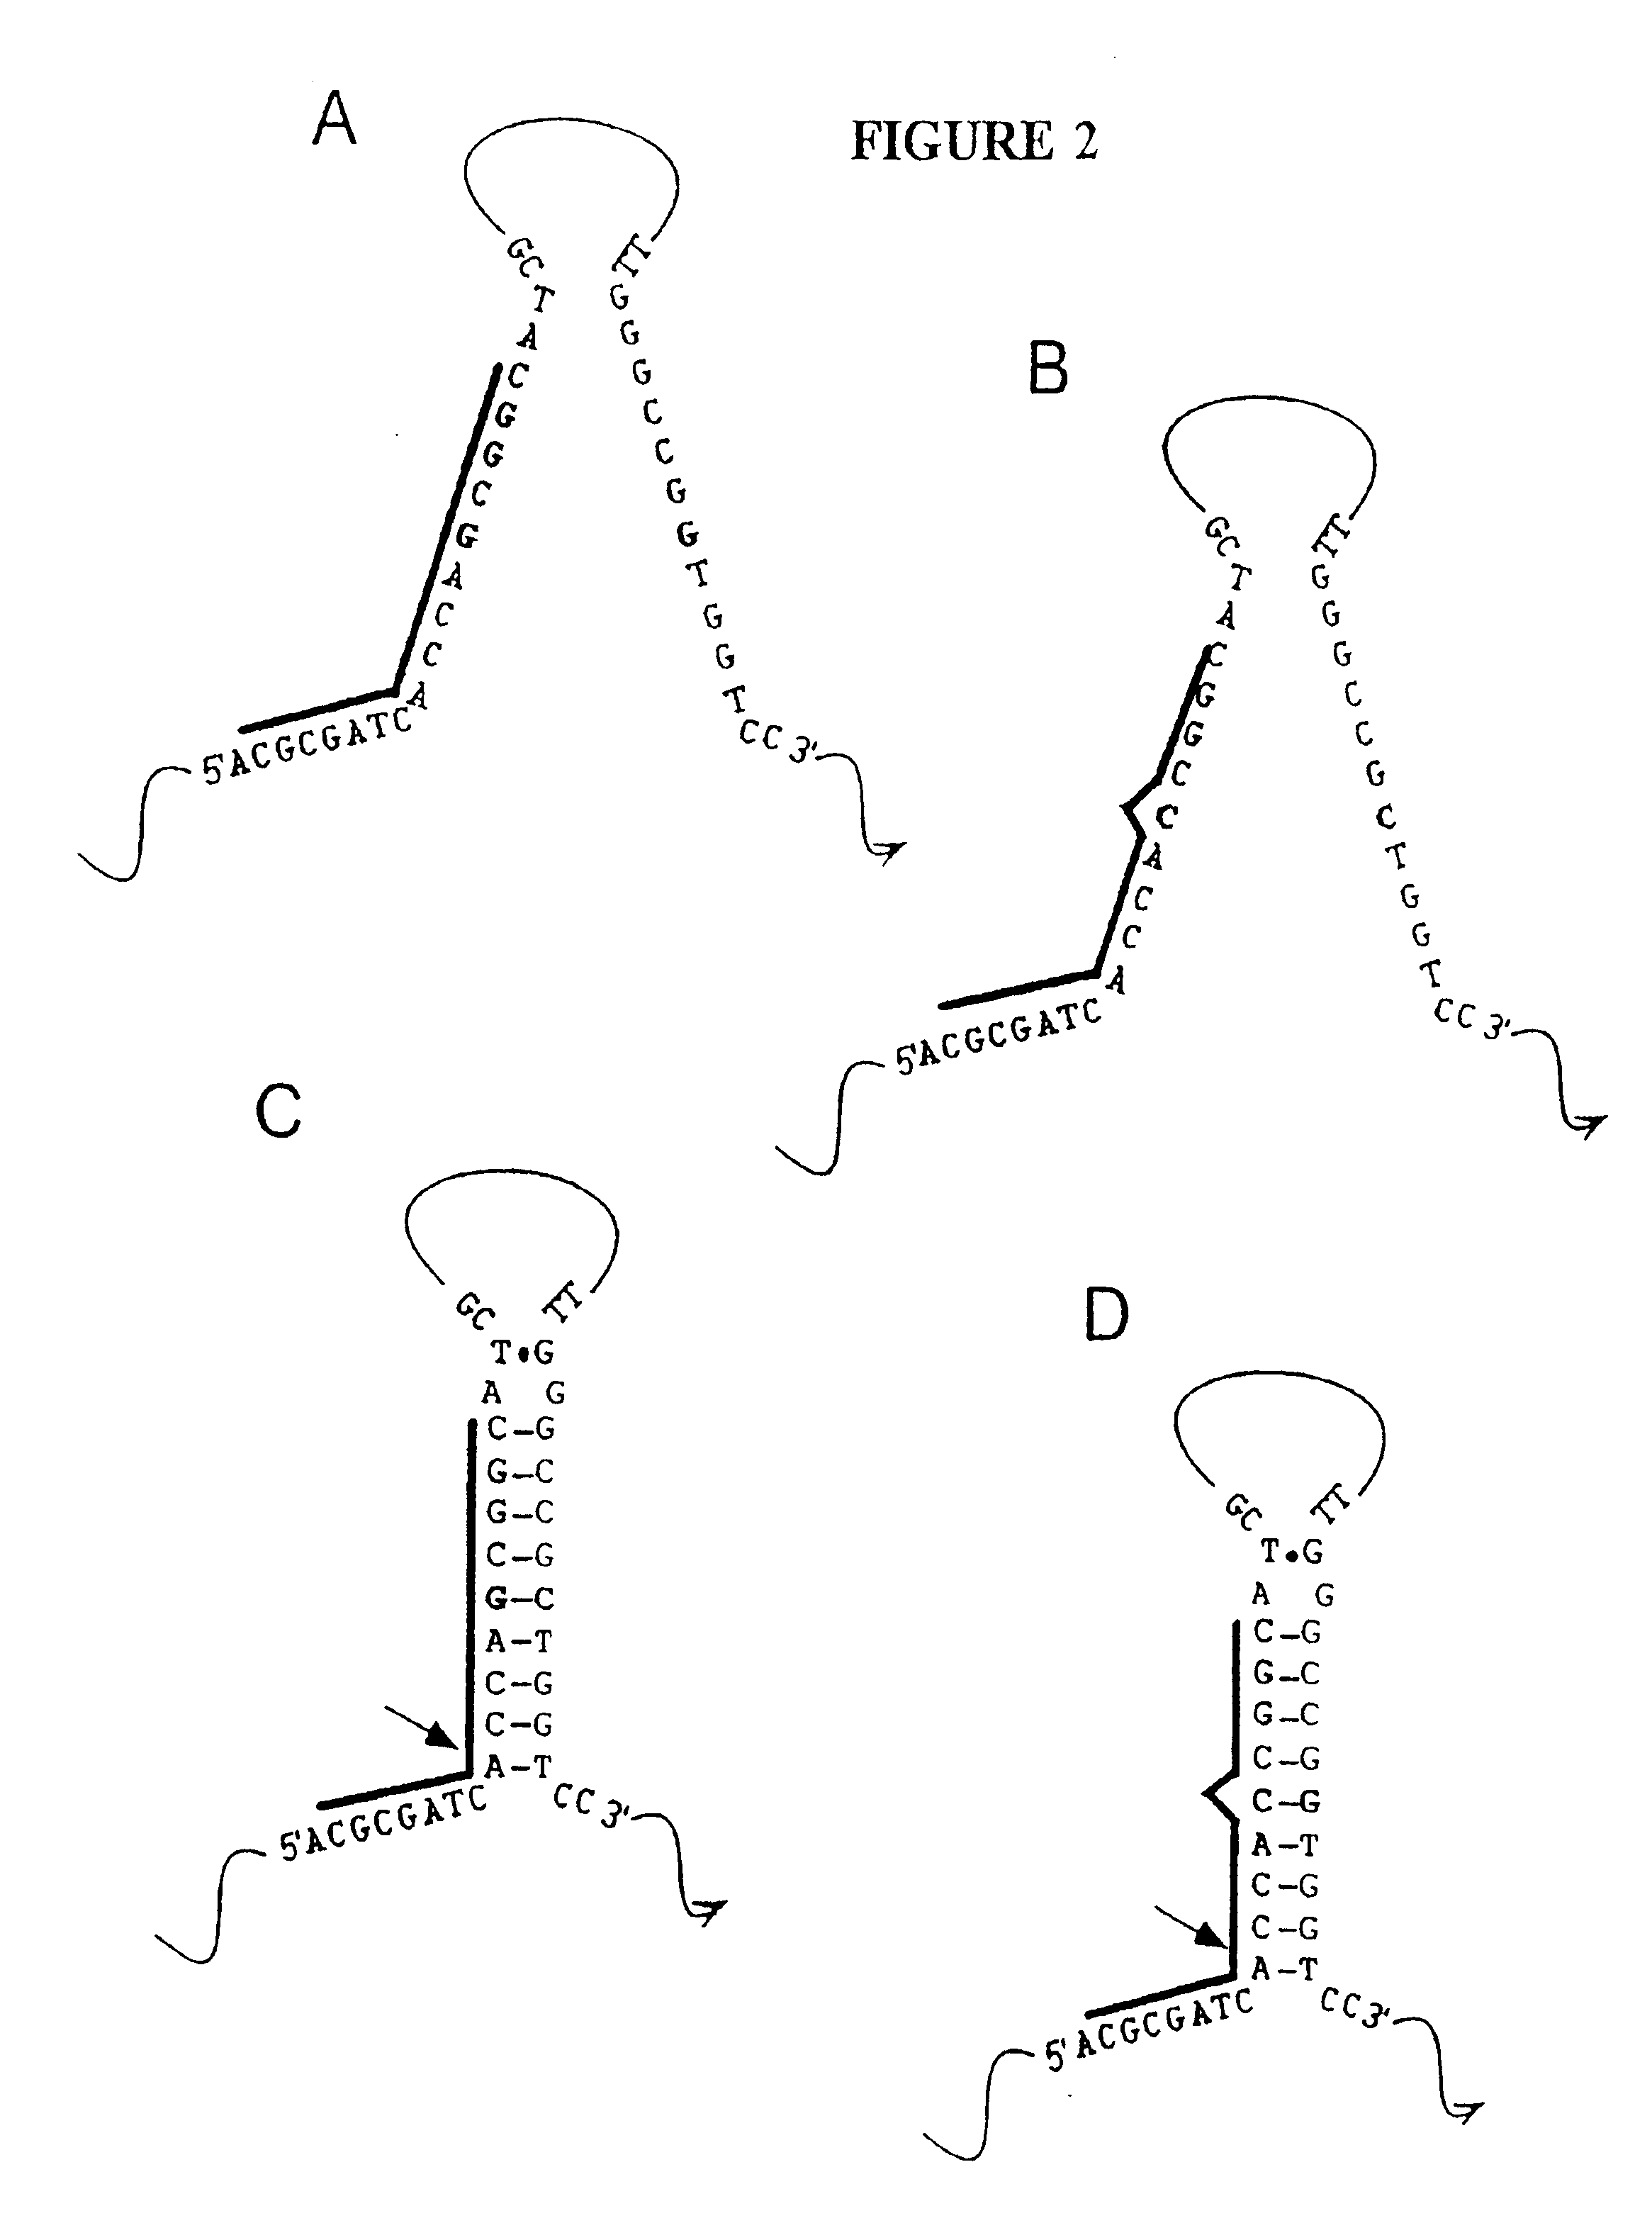 Target-dependent reactions using structure-bridging oligonucleotides